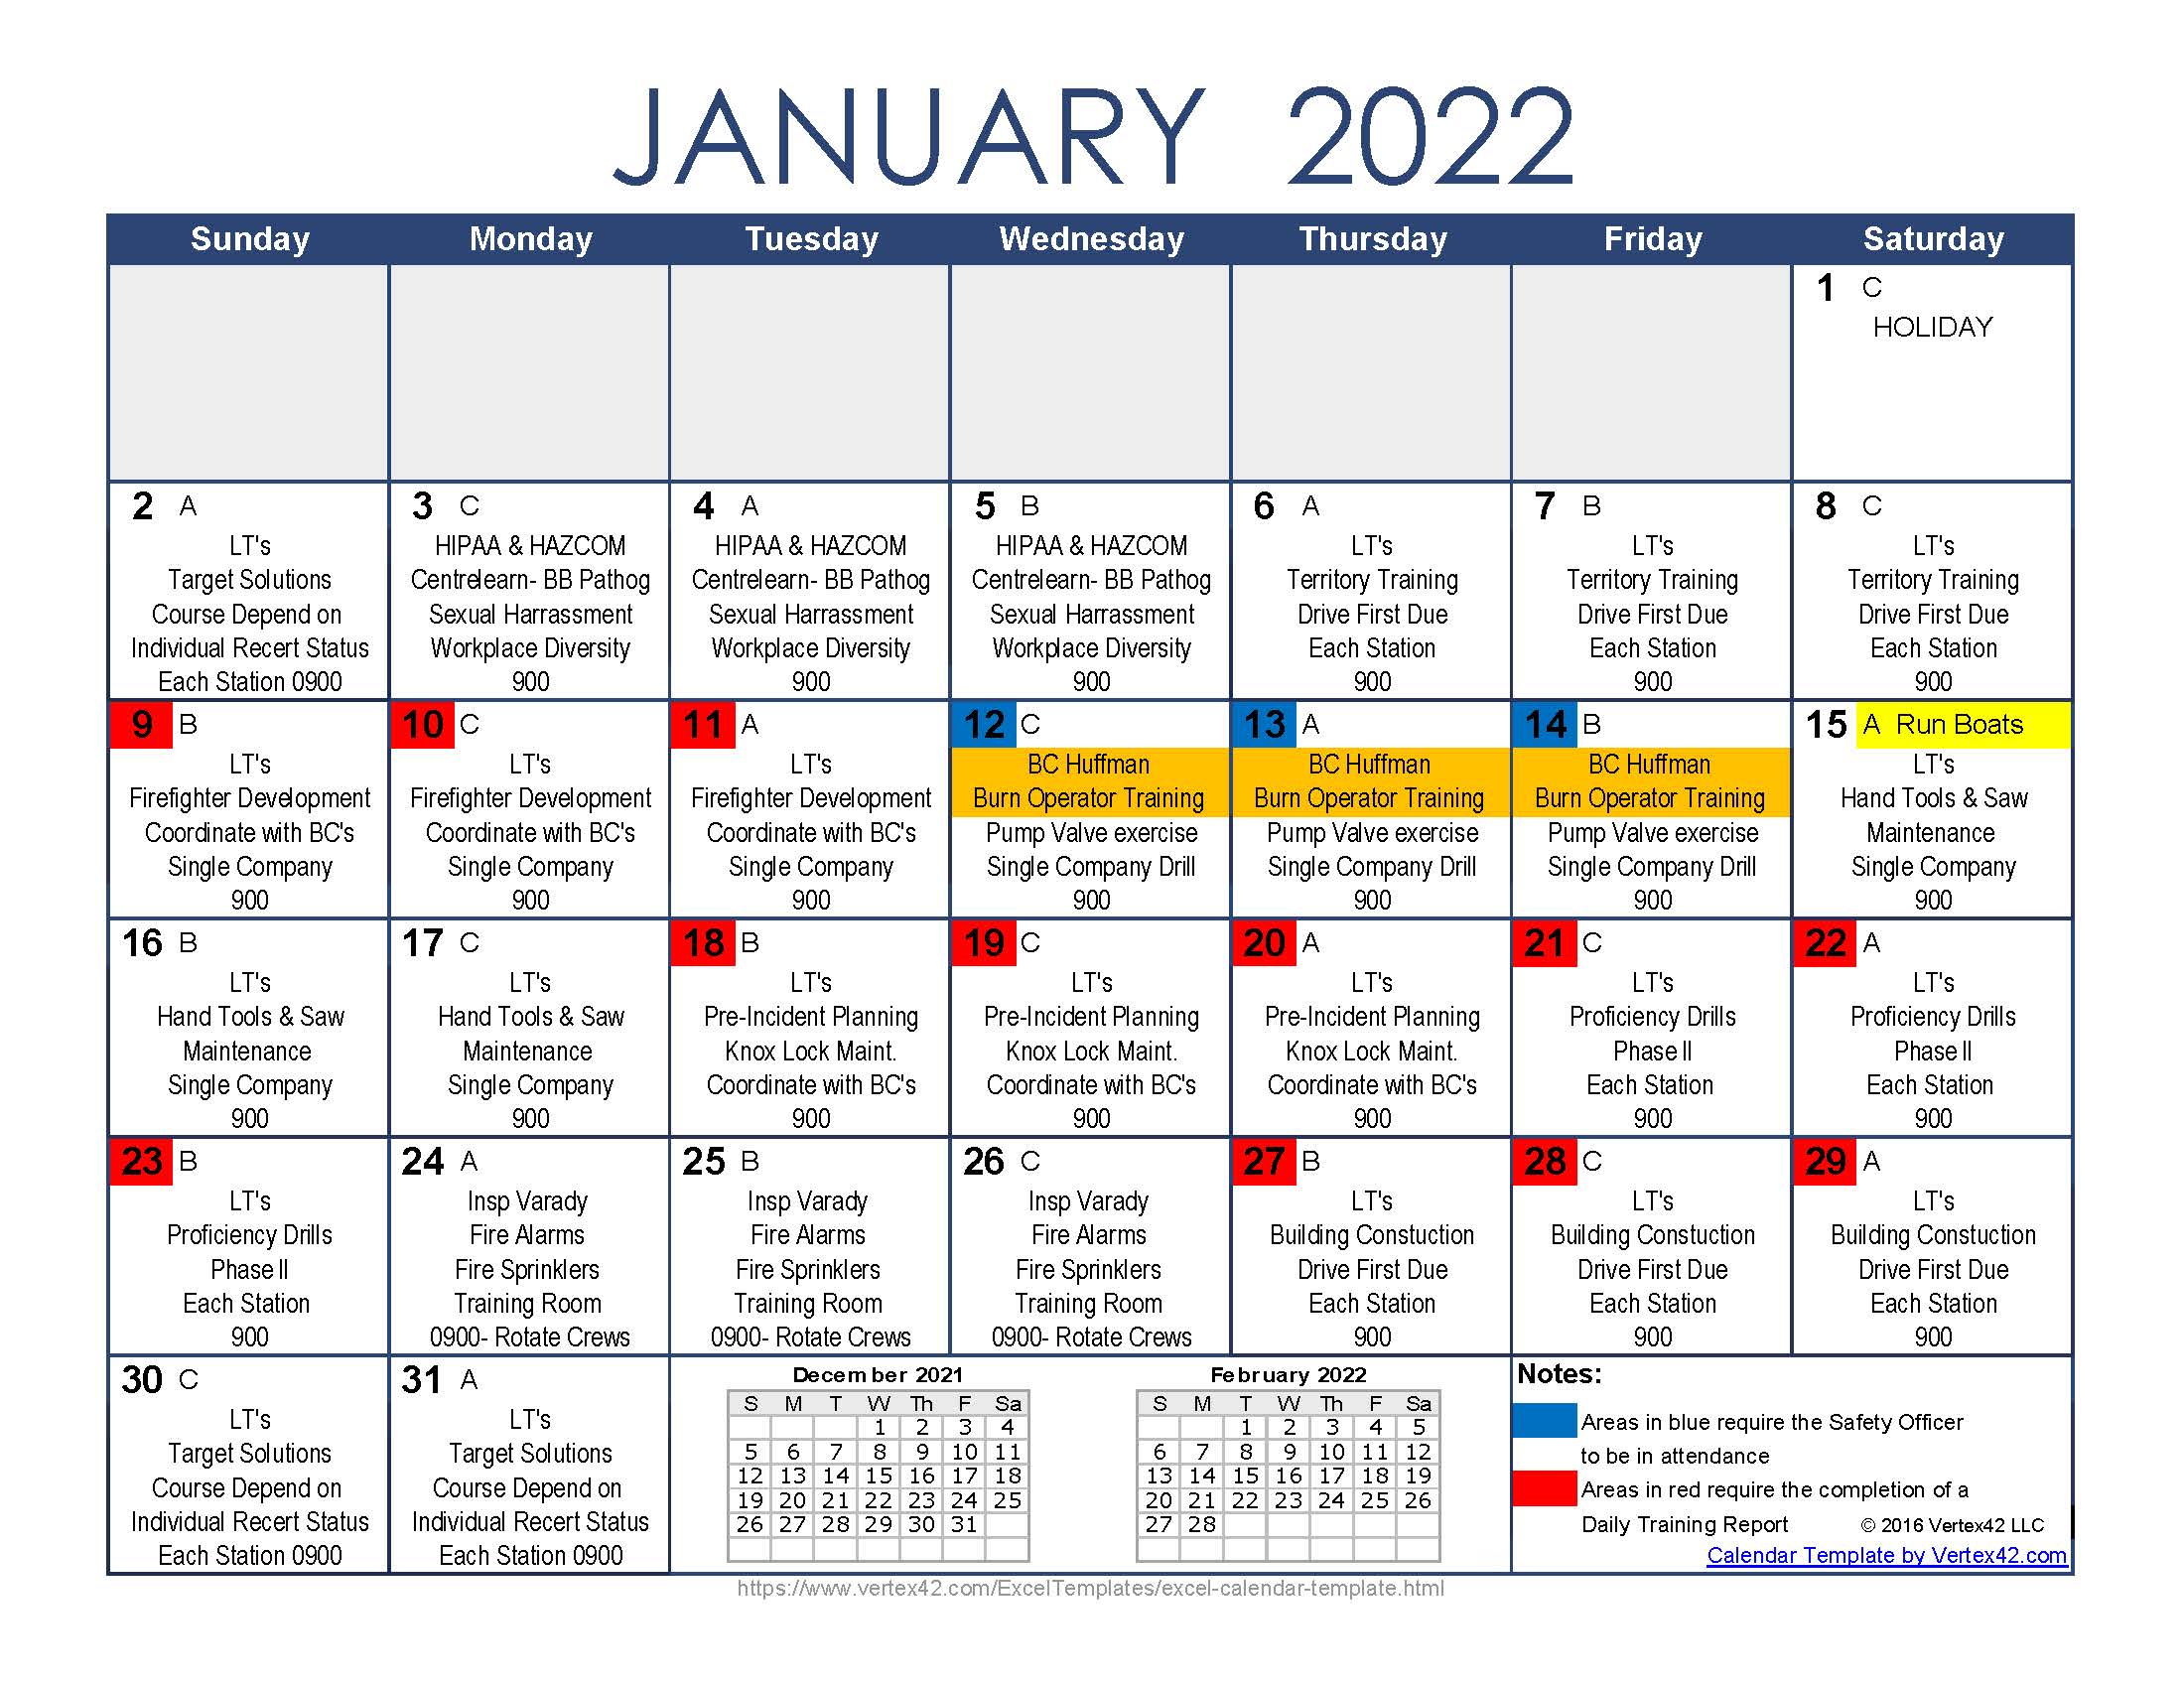 January Training Calendar